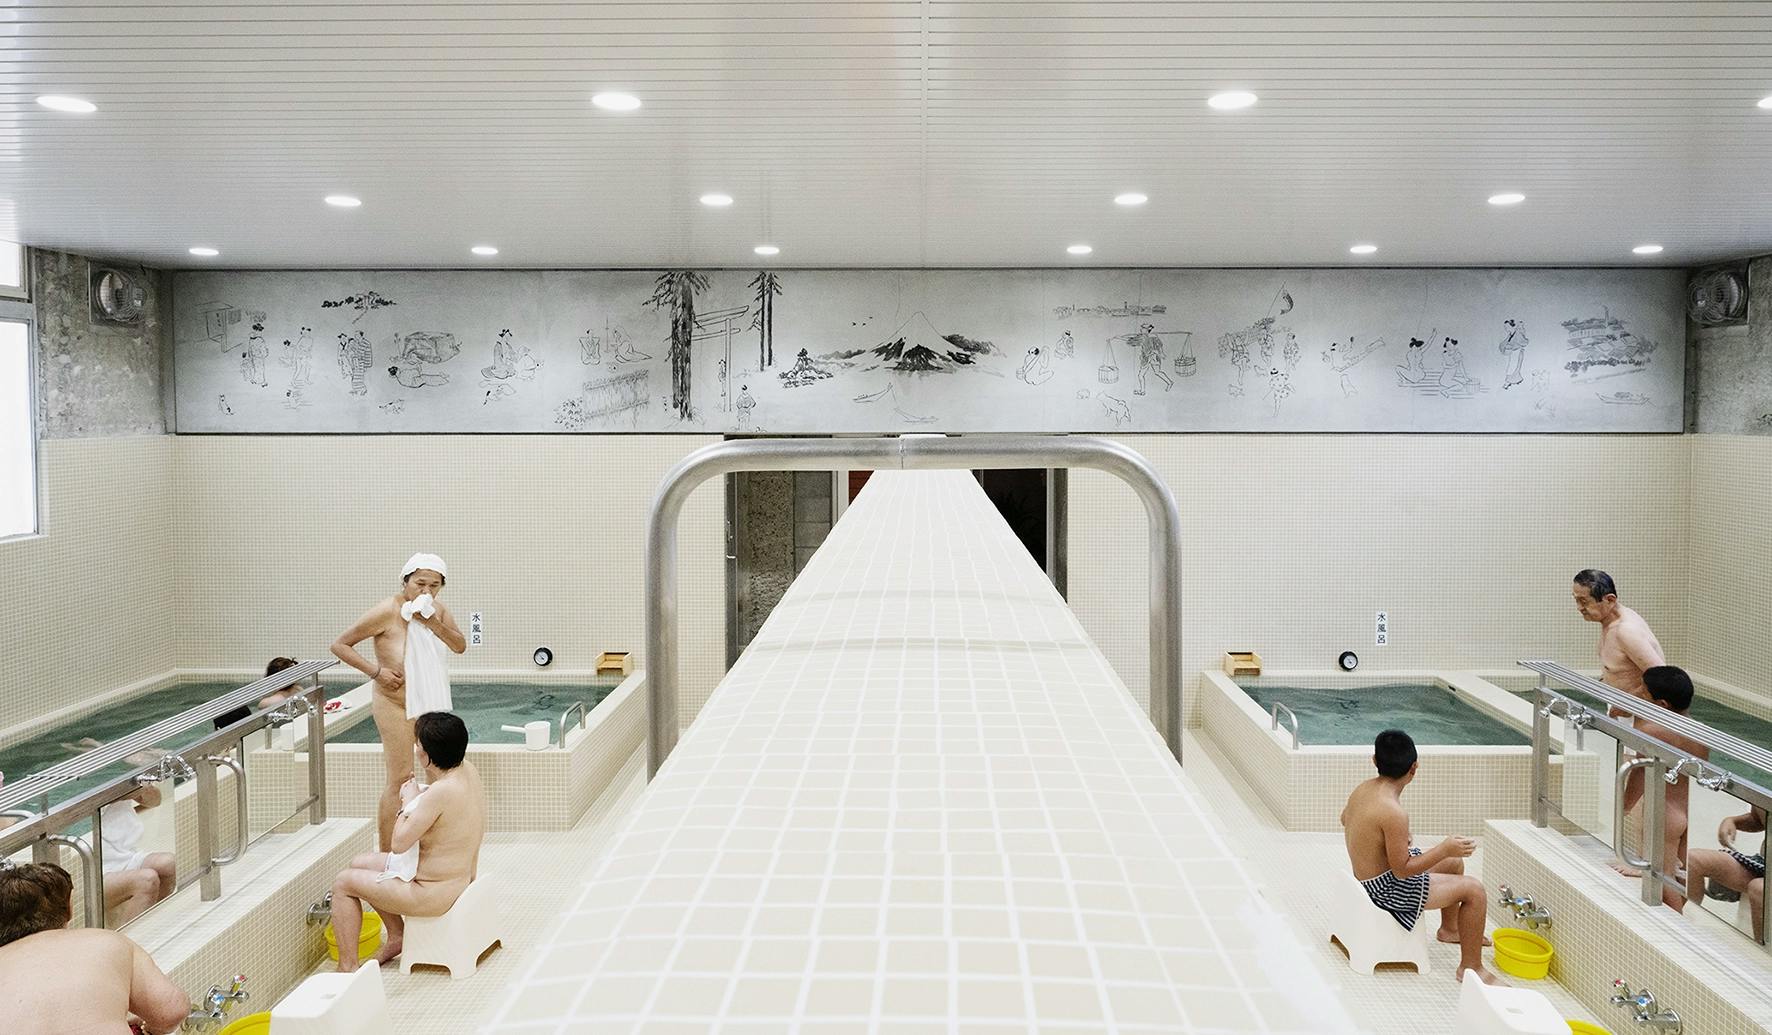 Koganeyu Sento (Public Bath House) in Sumida, Tokyo, Japan designed by Jo Nagasaka, Schemata Architects